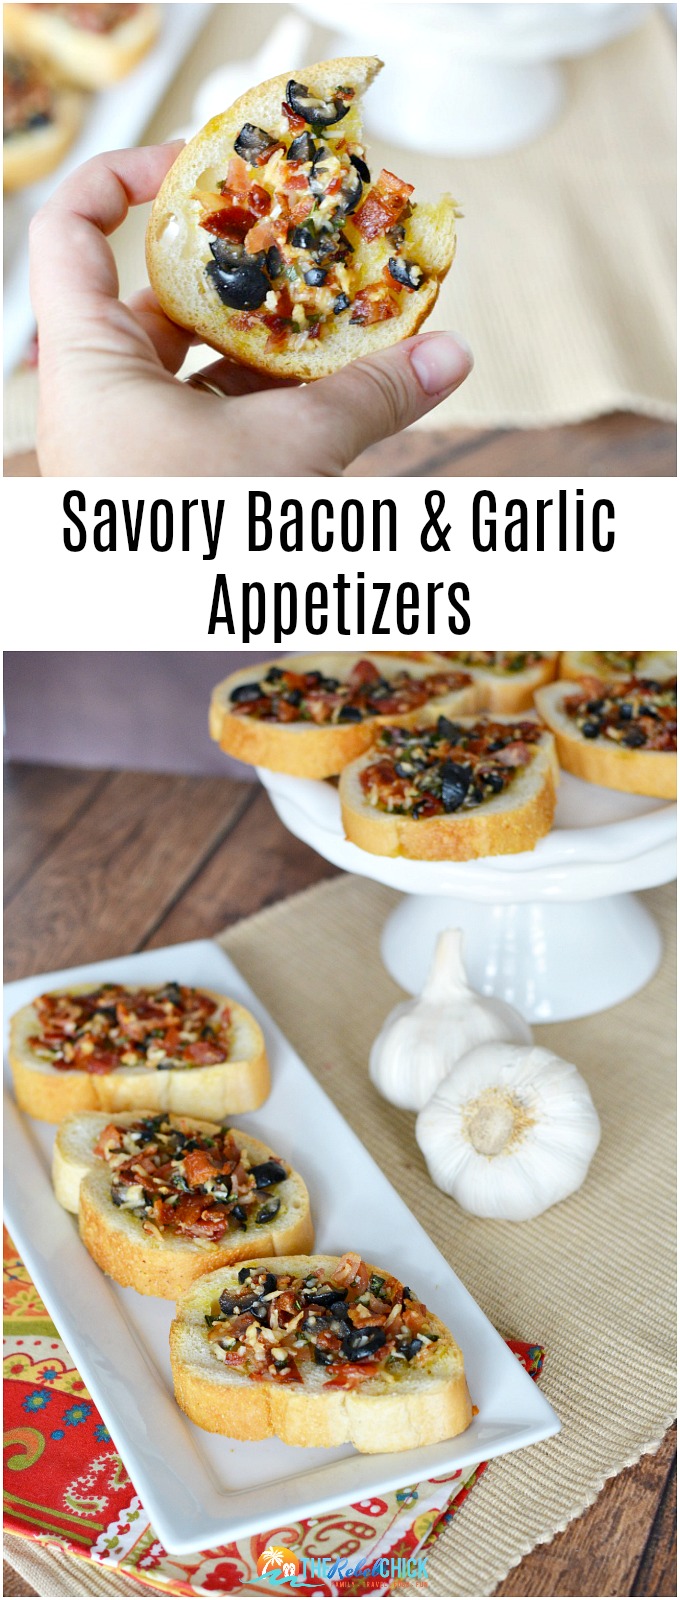 Savory Bacon & Garlic Appetizers Recipe